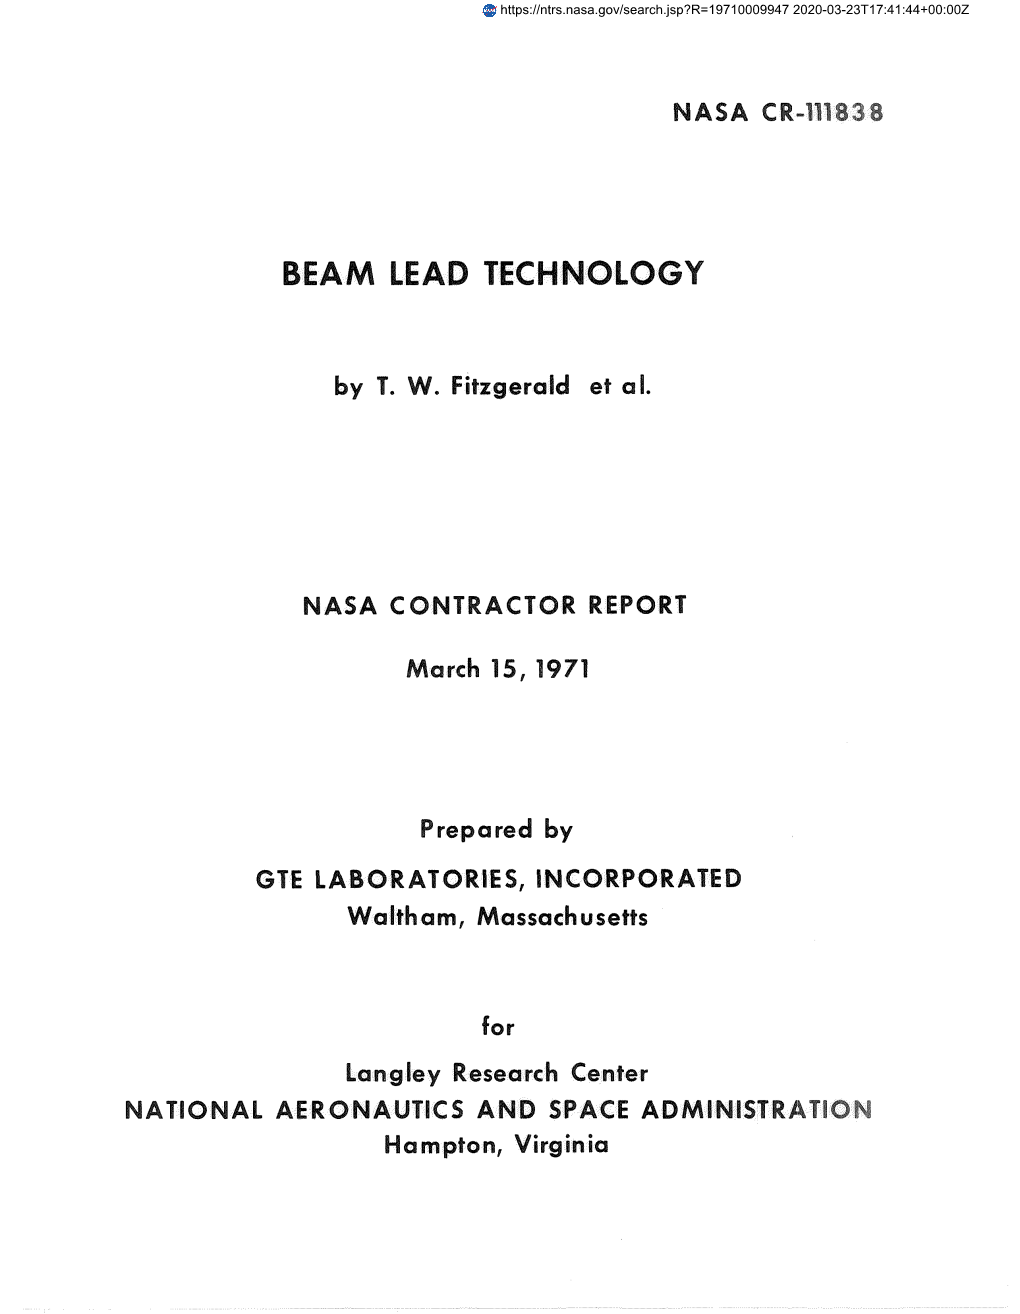 Beam Lead Technology